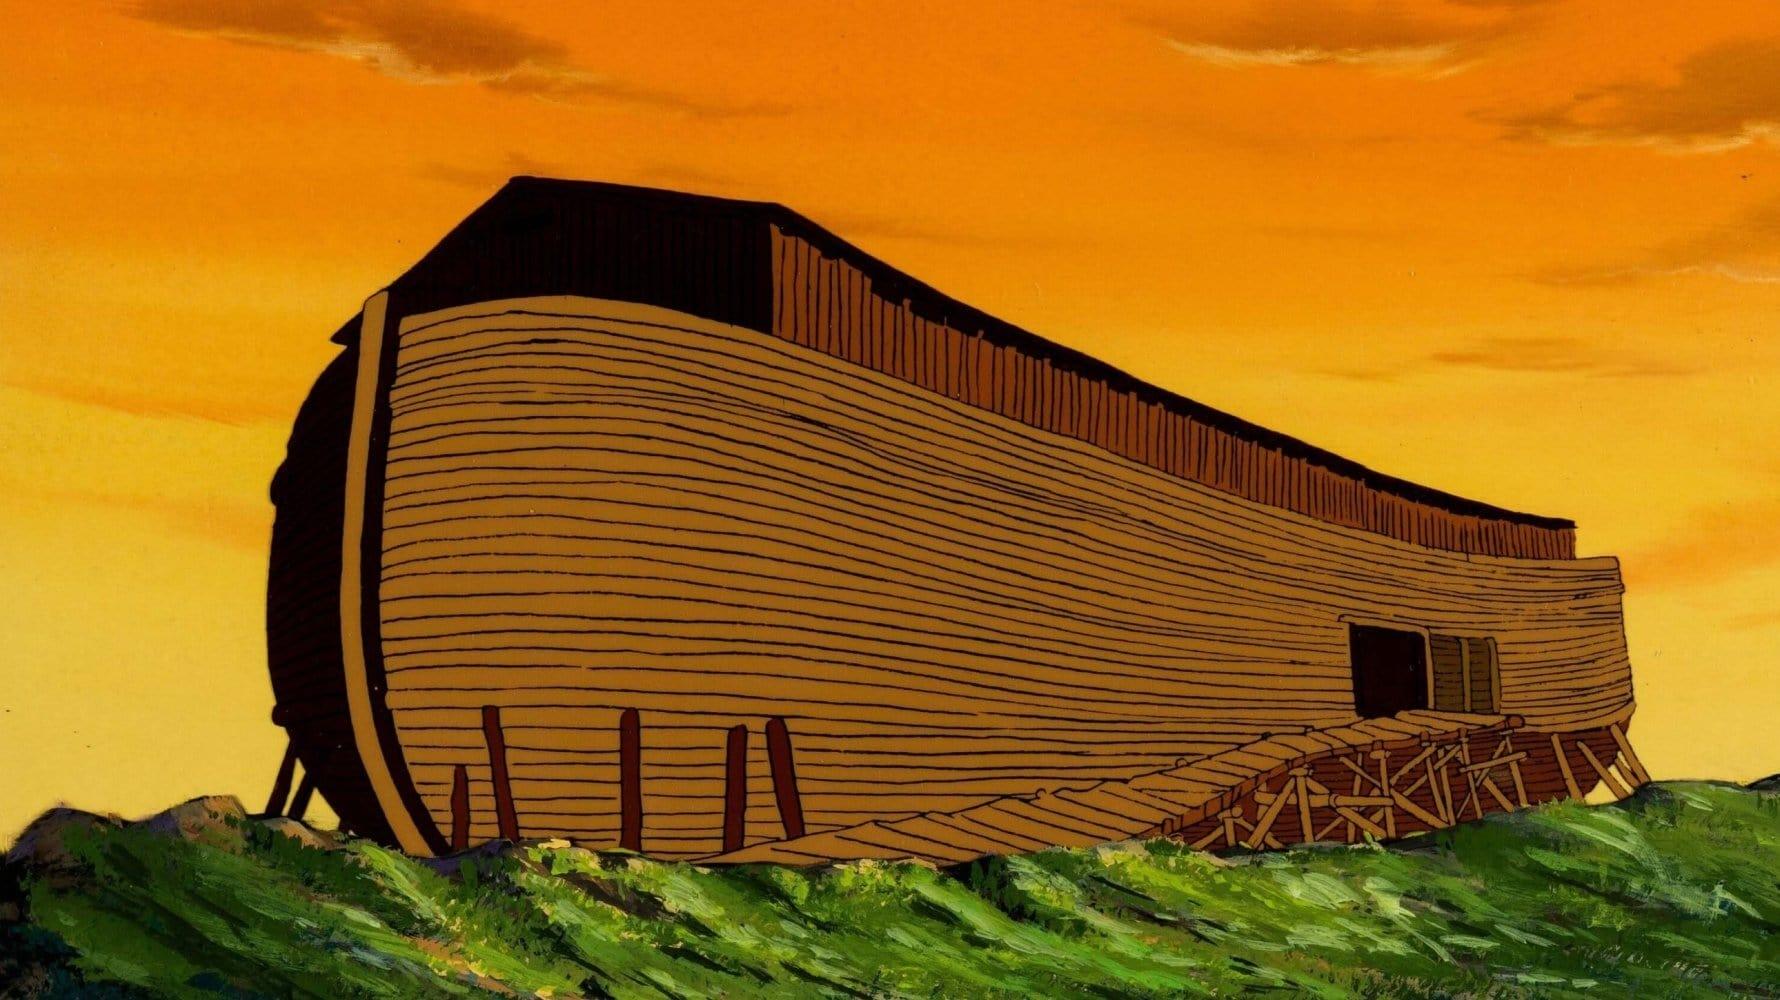 Noah's Ark backdrop